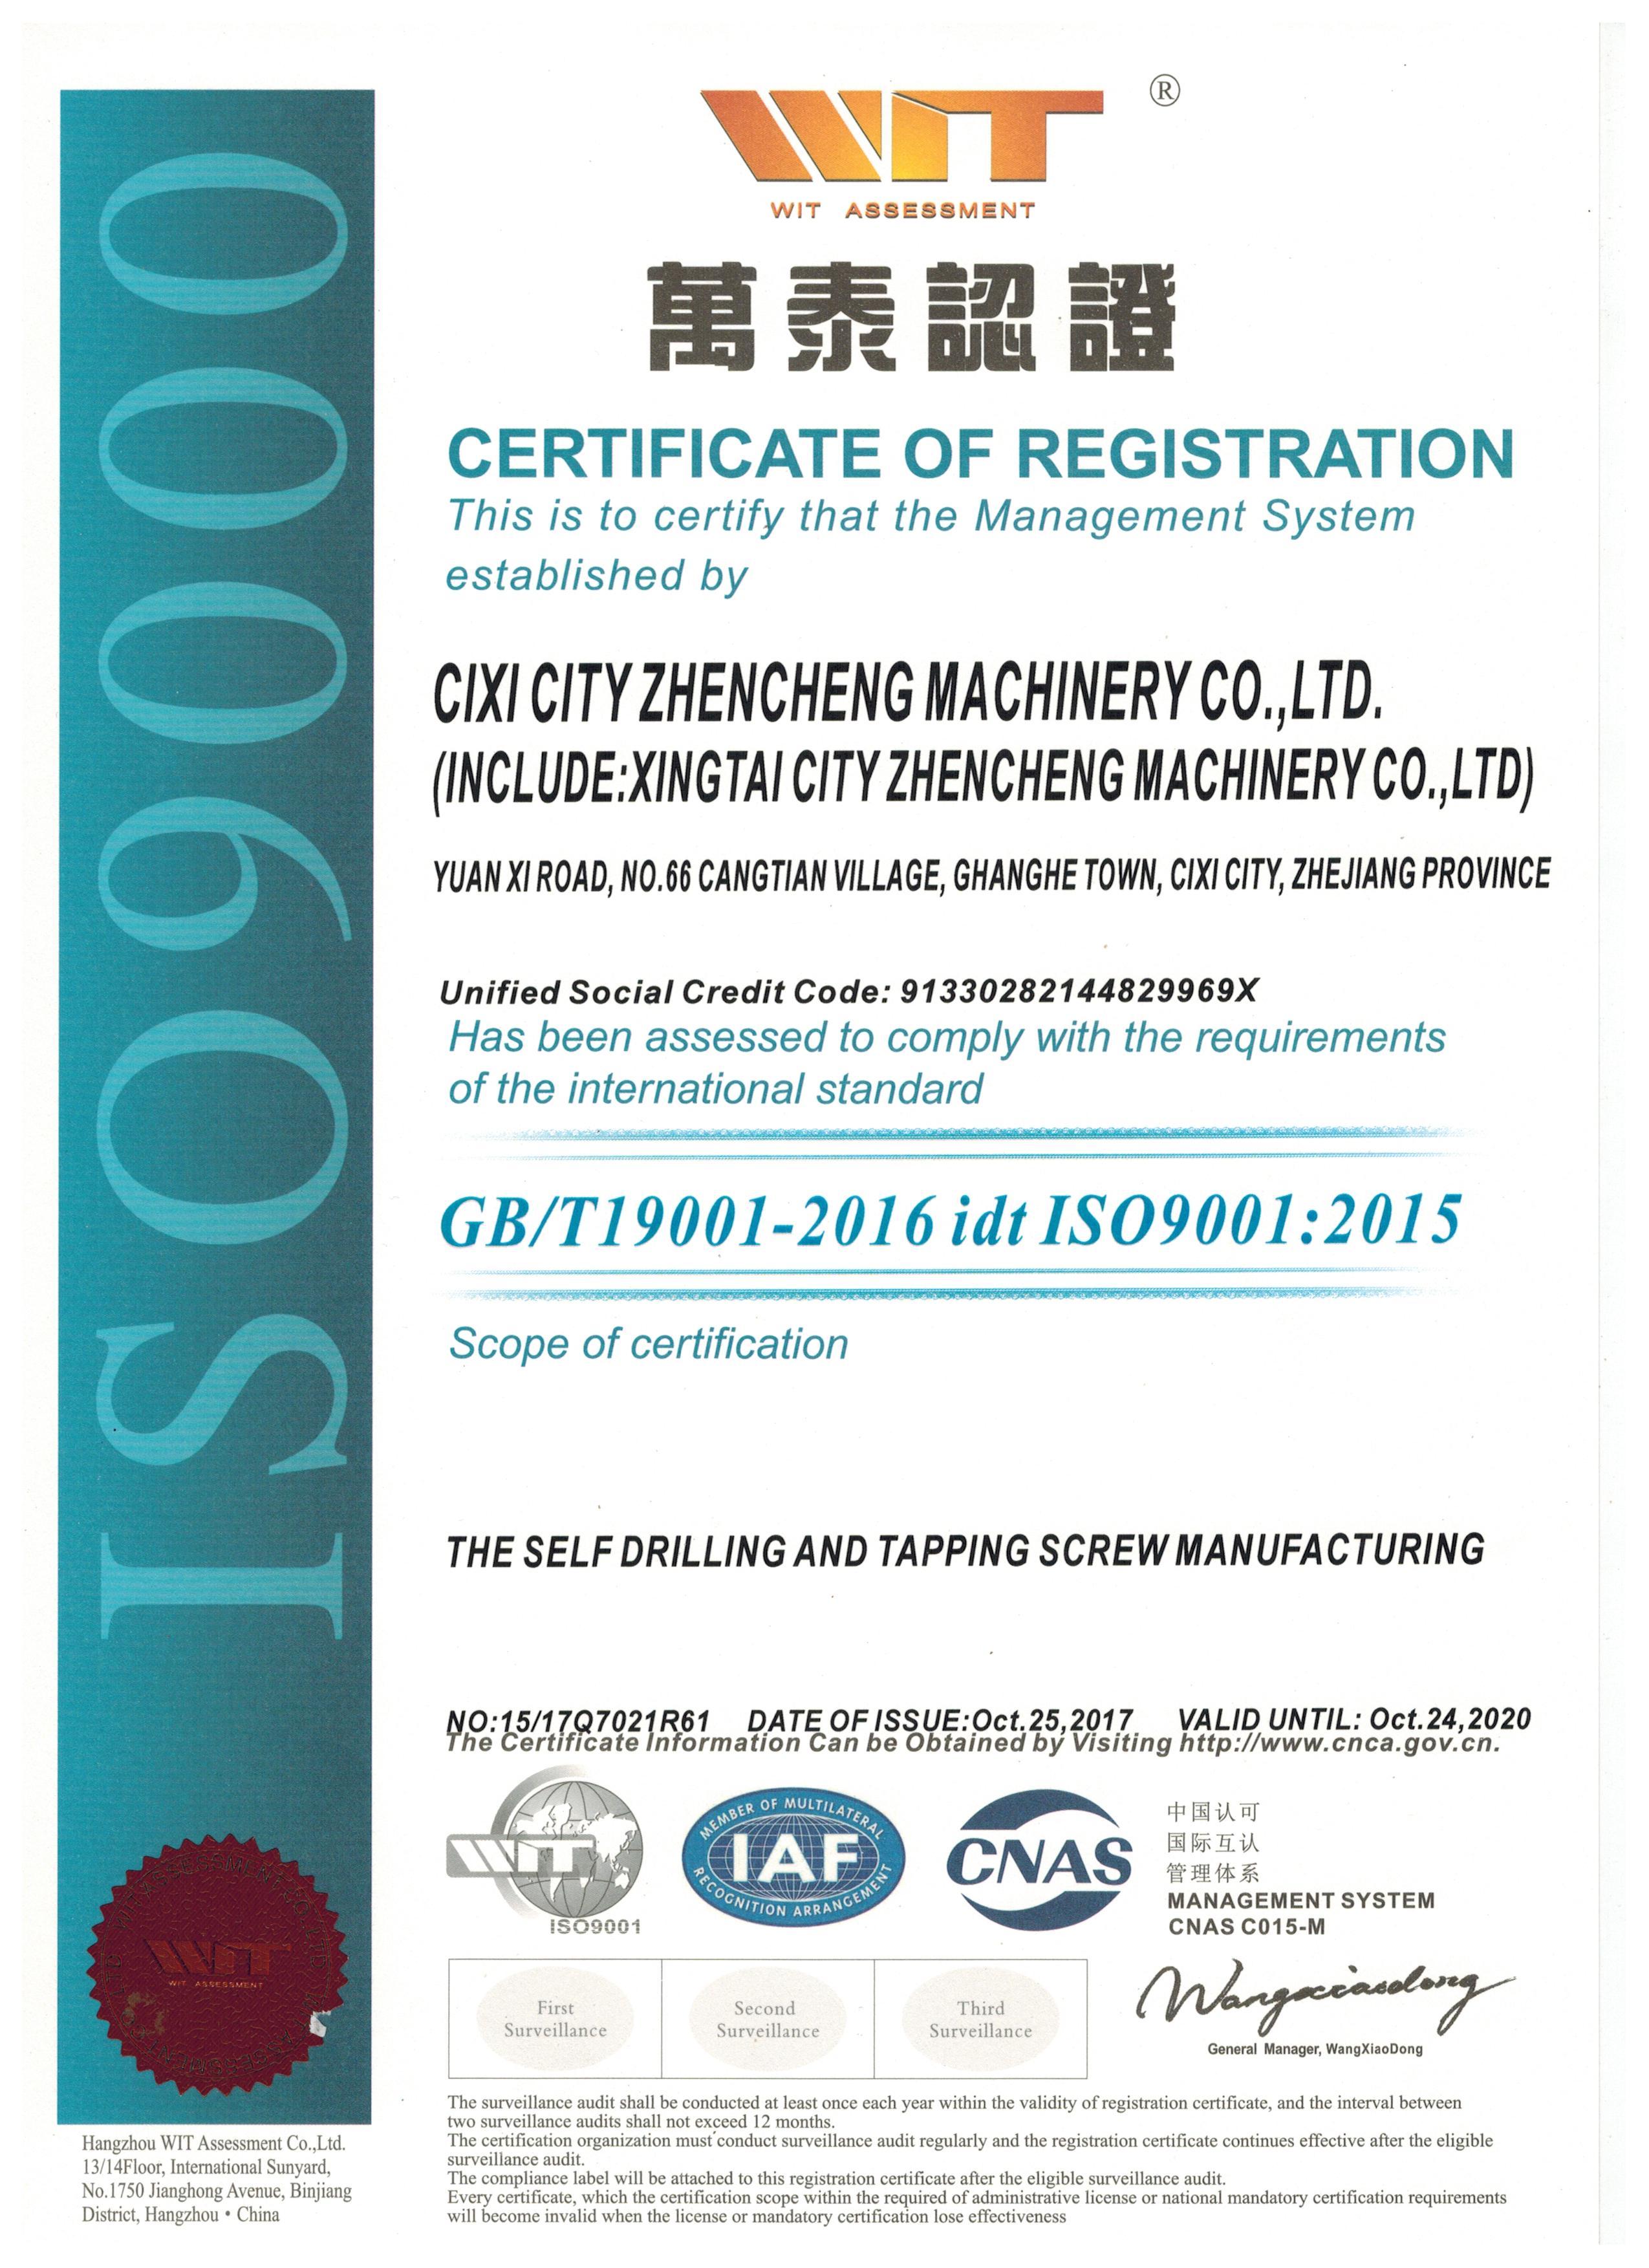 ISO9000 tanúsítvány